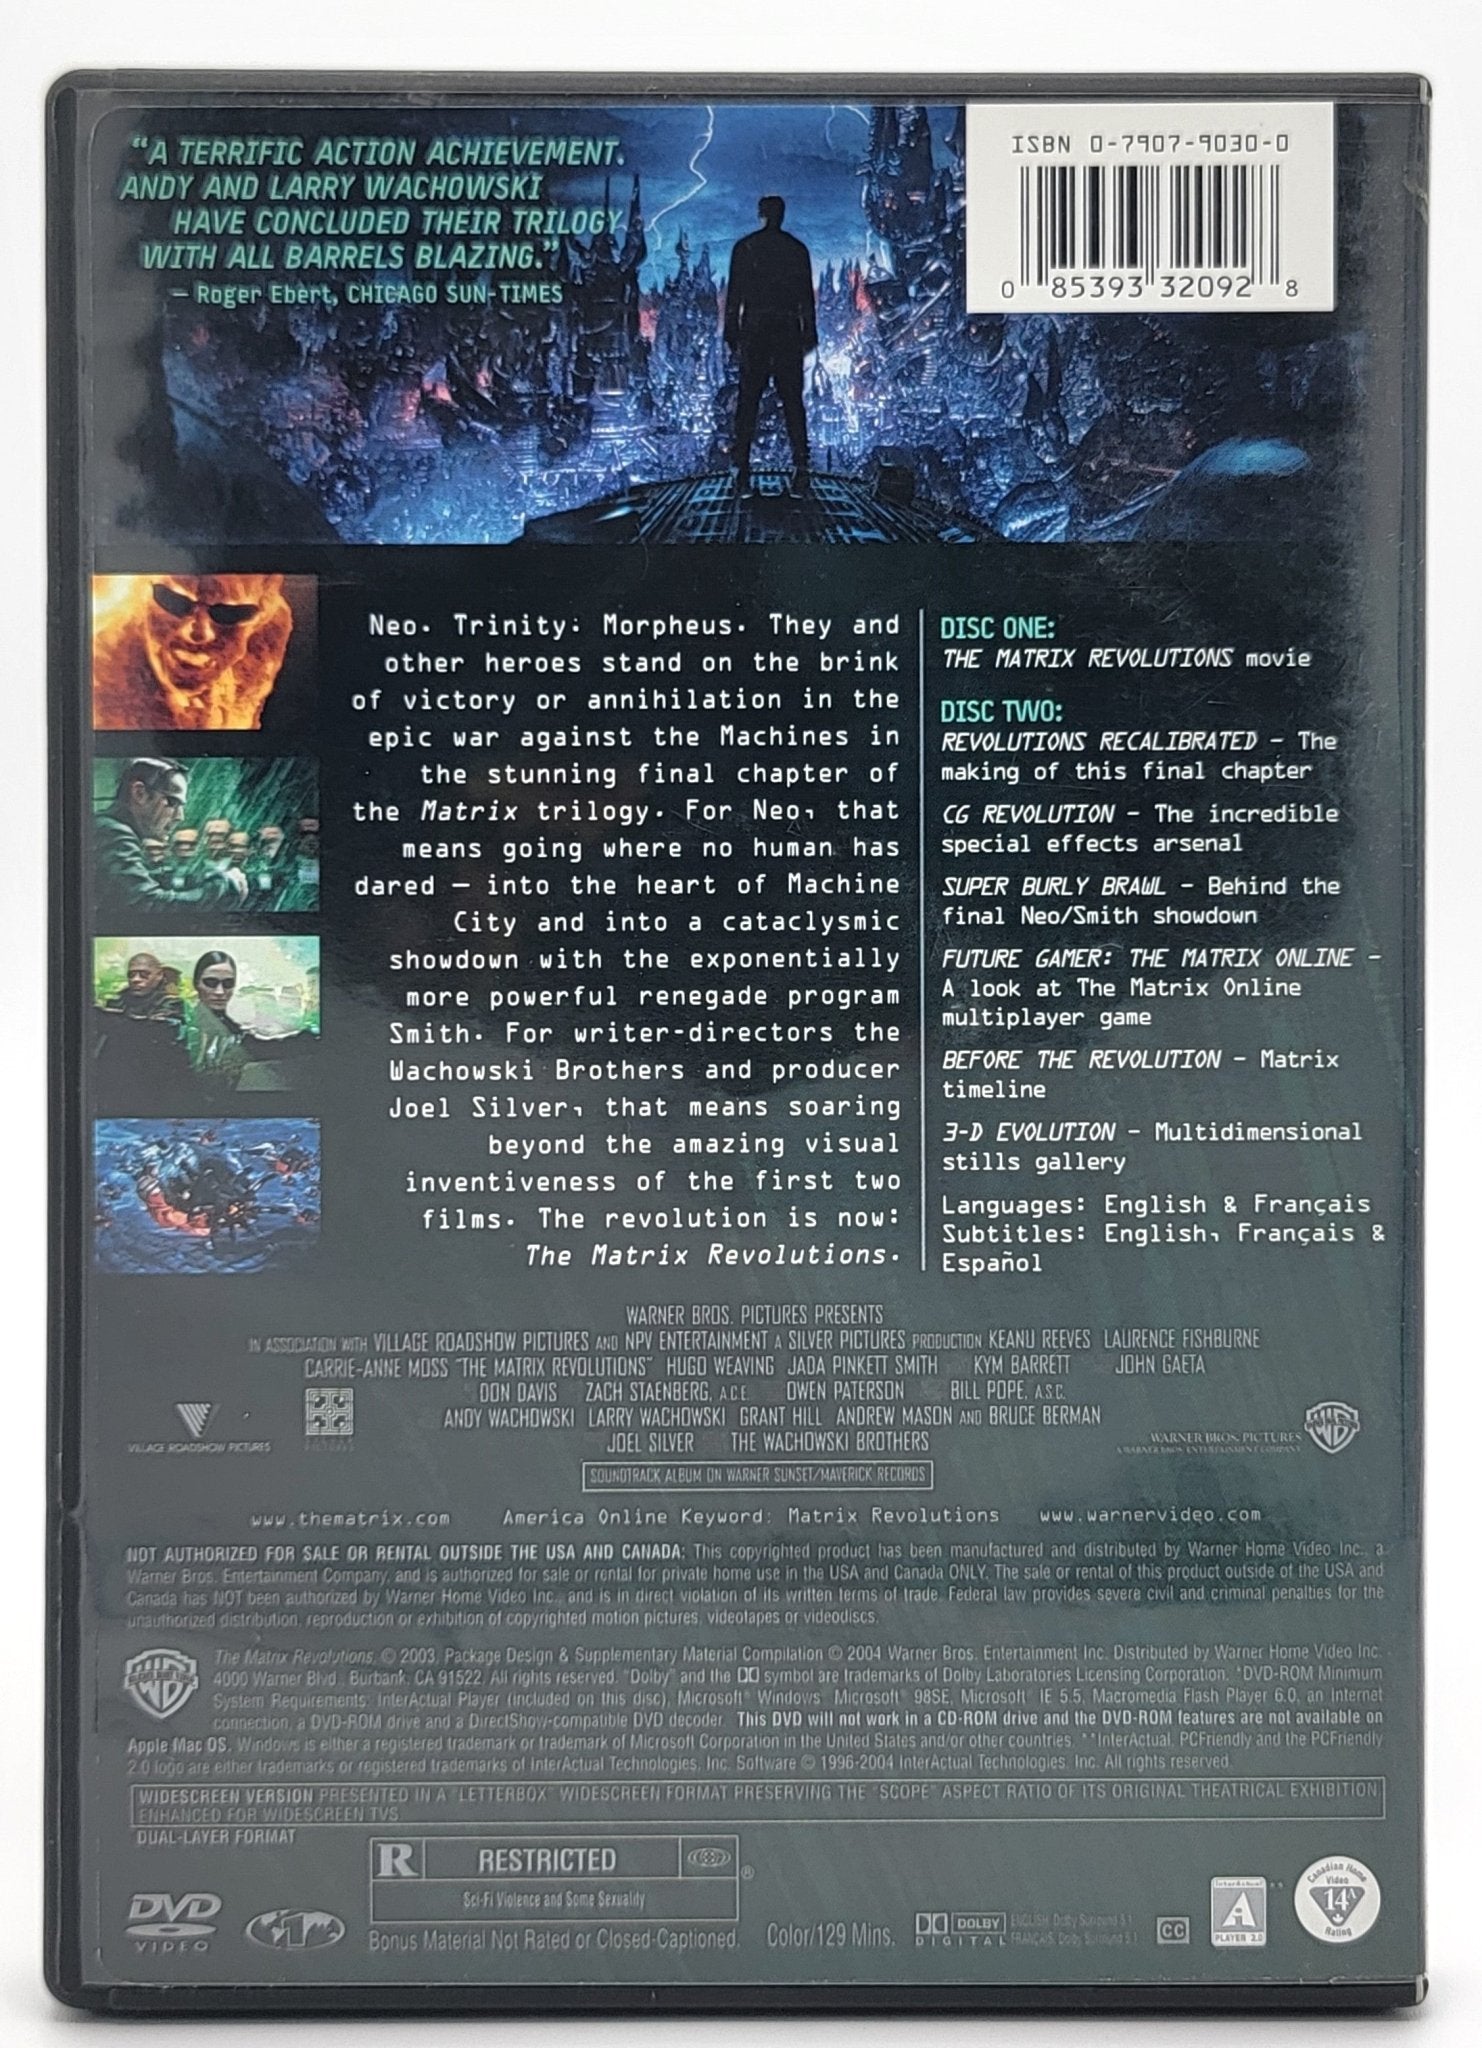 Warner Brothers - Matrix Revolutions | DVD | 2 Disc Widescreen Edition - DVD - Steady Bunny Shop